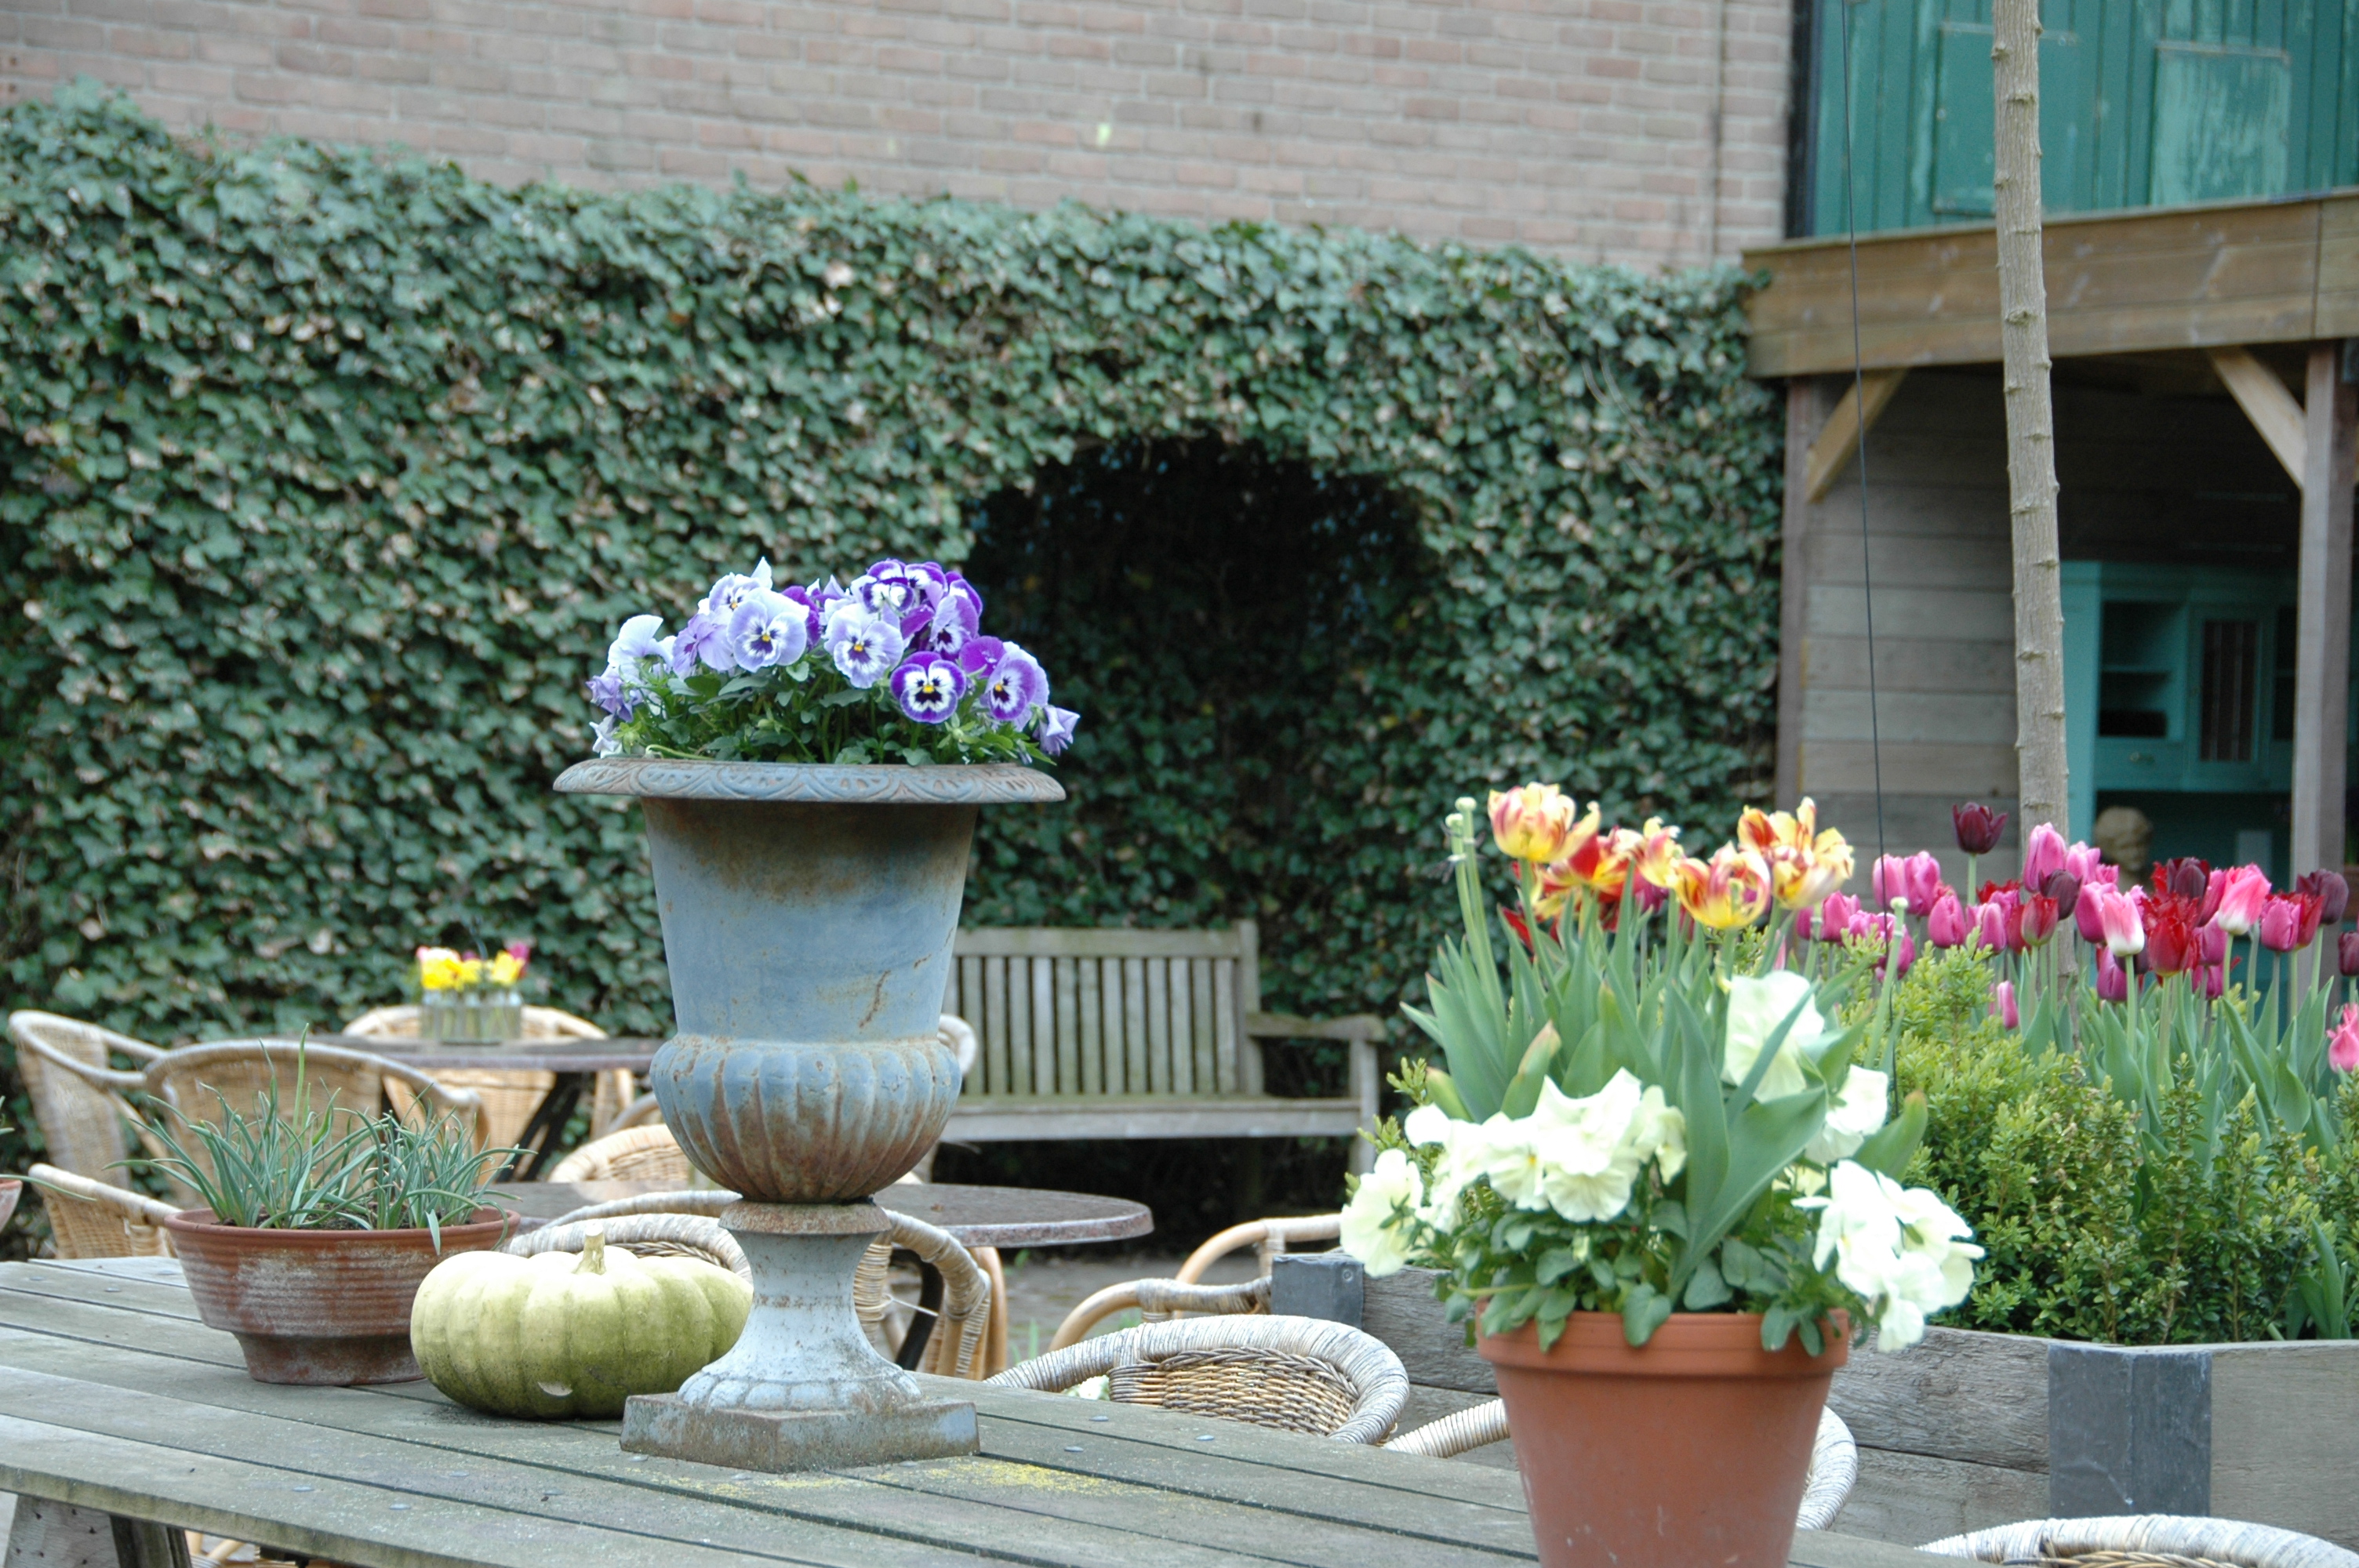 lifestyle winkel sfeerfoto's Elly Kloosterboer-Blok bloemen planten